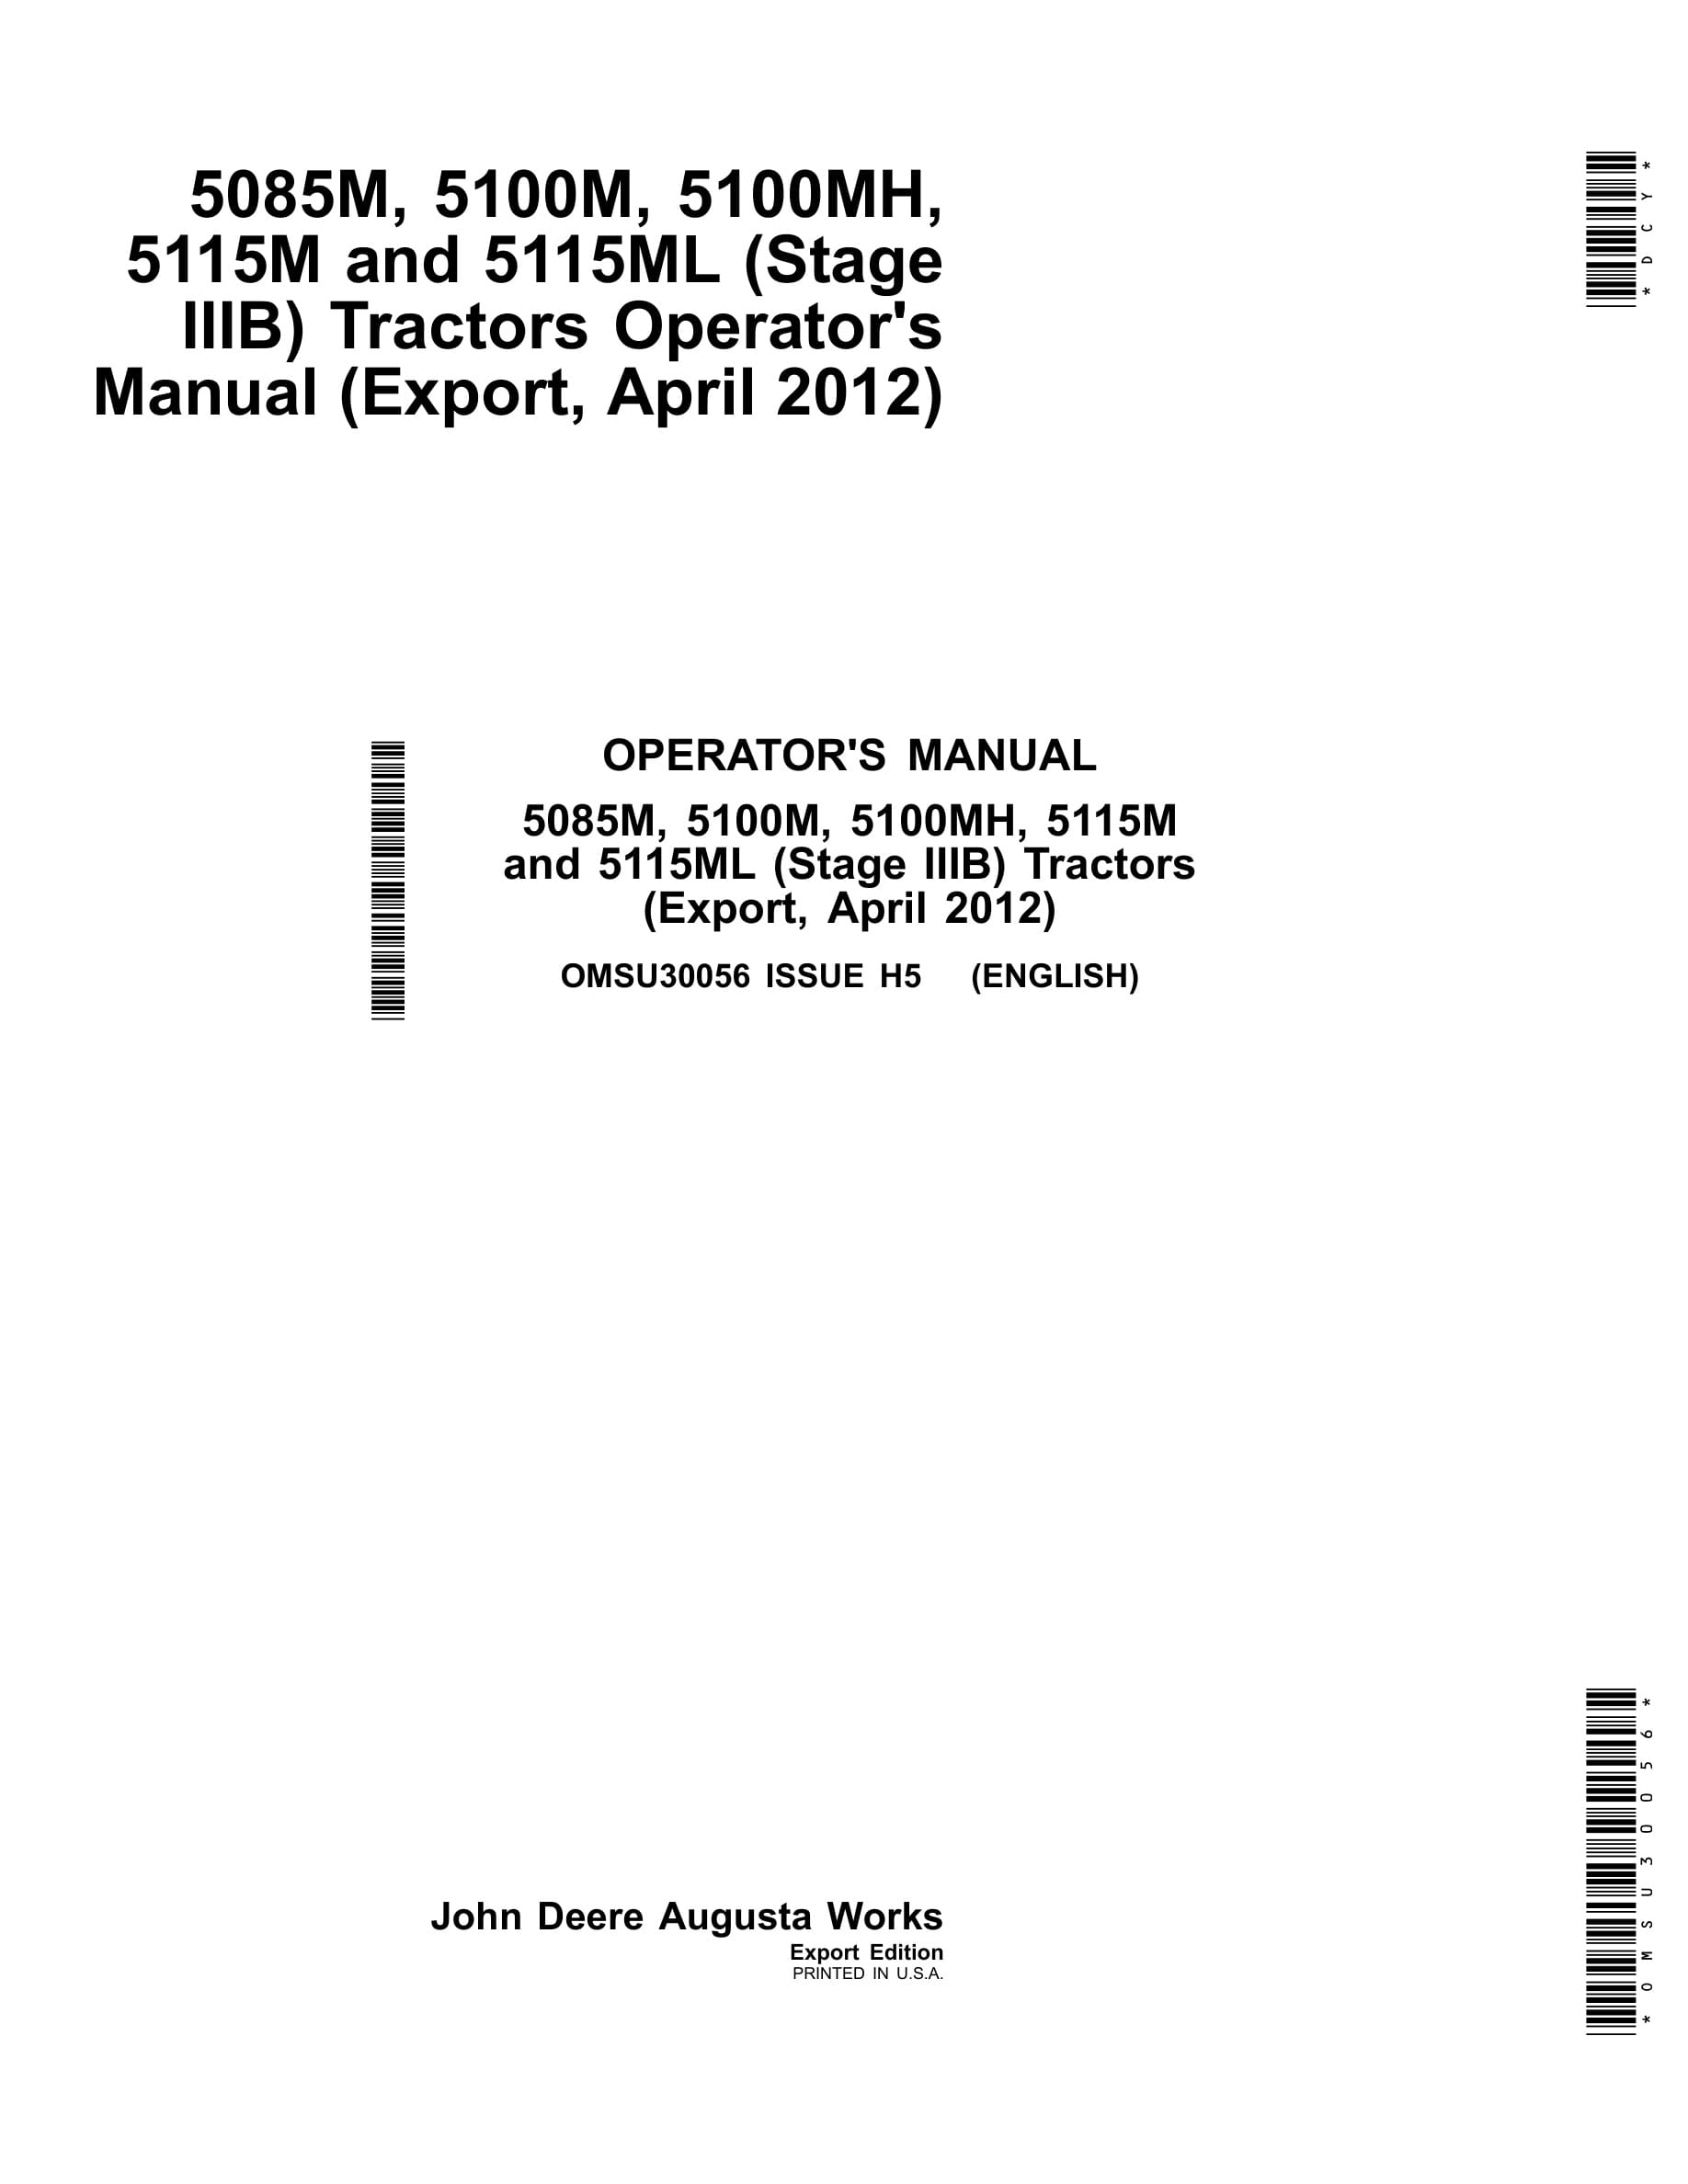 John Deere 5085m, 5100m, 5100mh, 5115m And 5115ml (stage Iiib) Tractors Operator Manuals OMSU30056-1